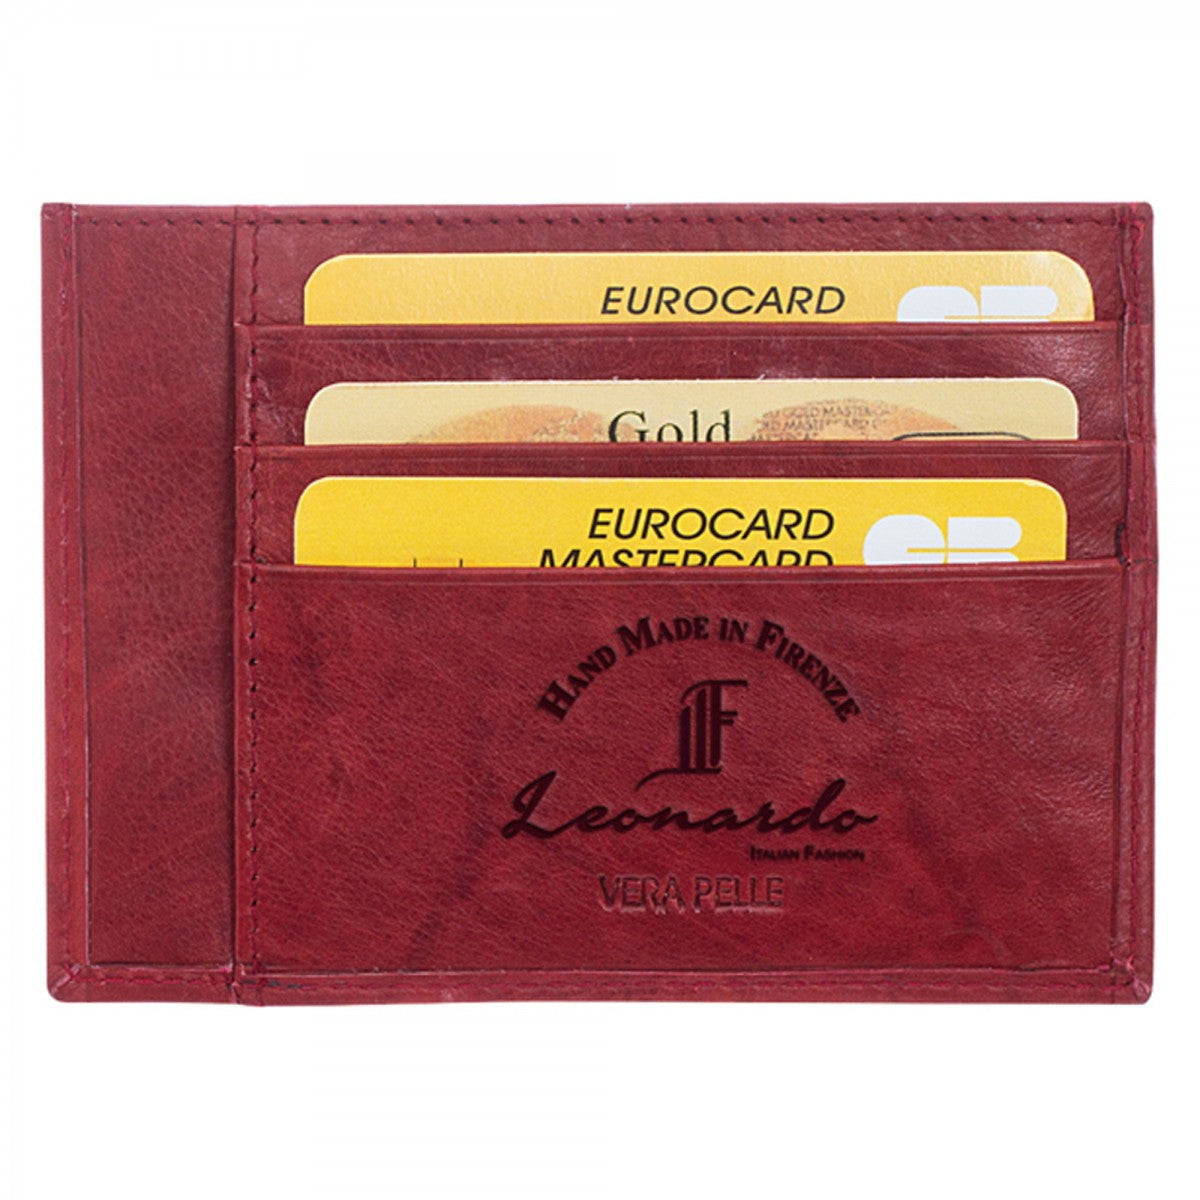 Leonardo Men's Compact Billfold Wallet